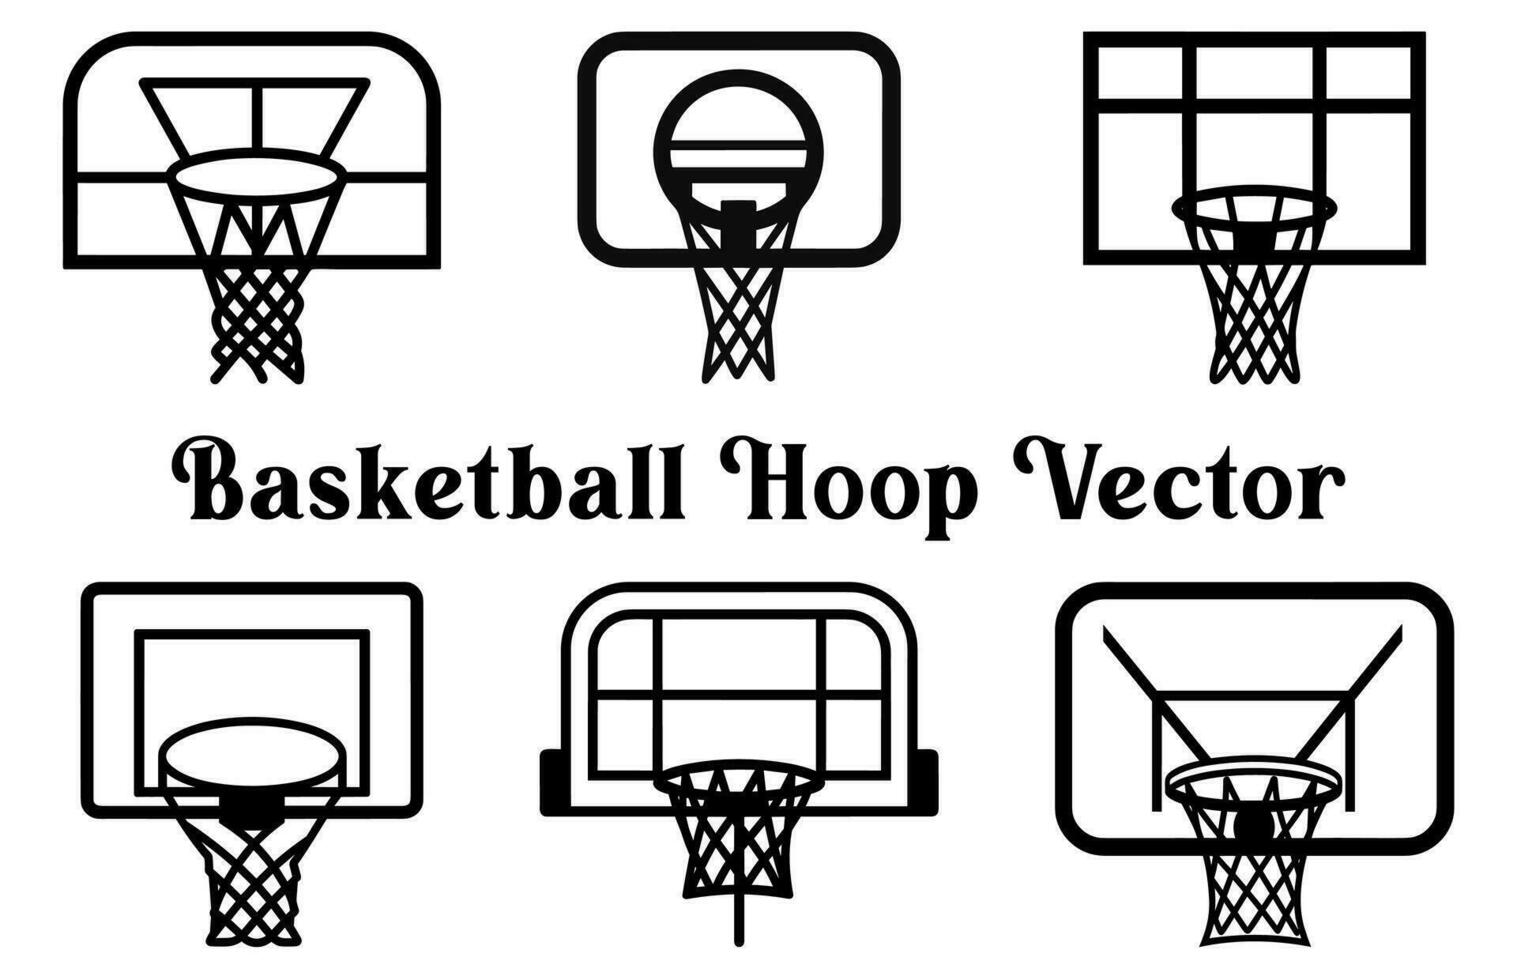 Basketball Hoop Vector design isolated on white background, Hoop, Hoop icon, Hoop illustration